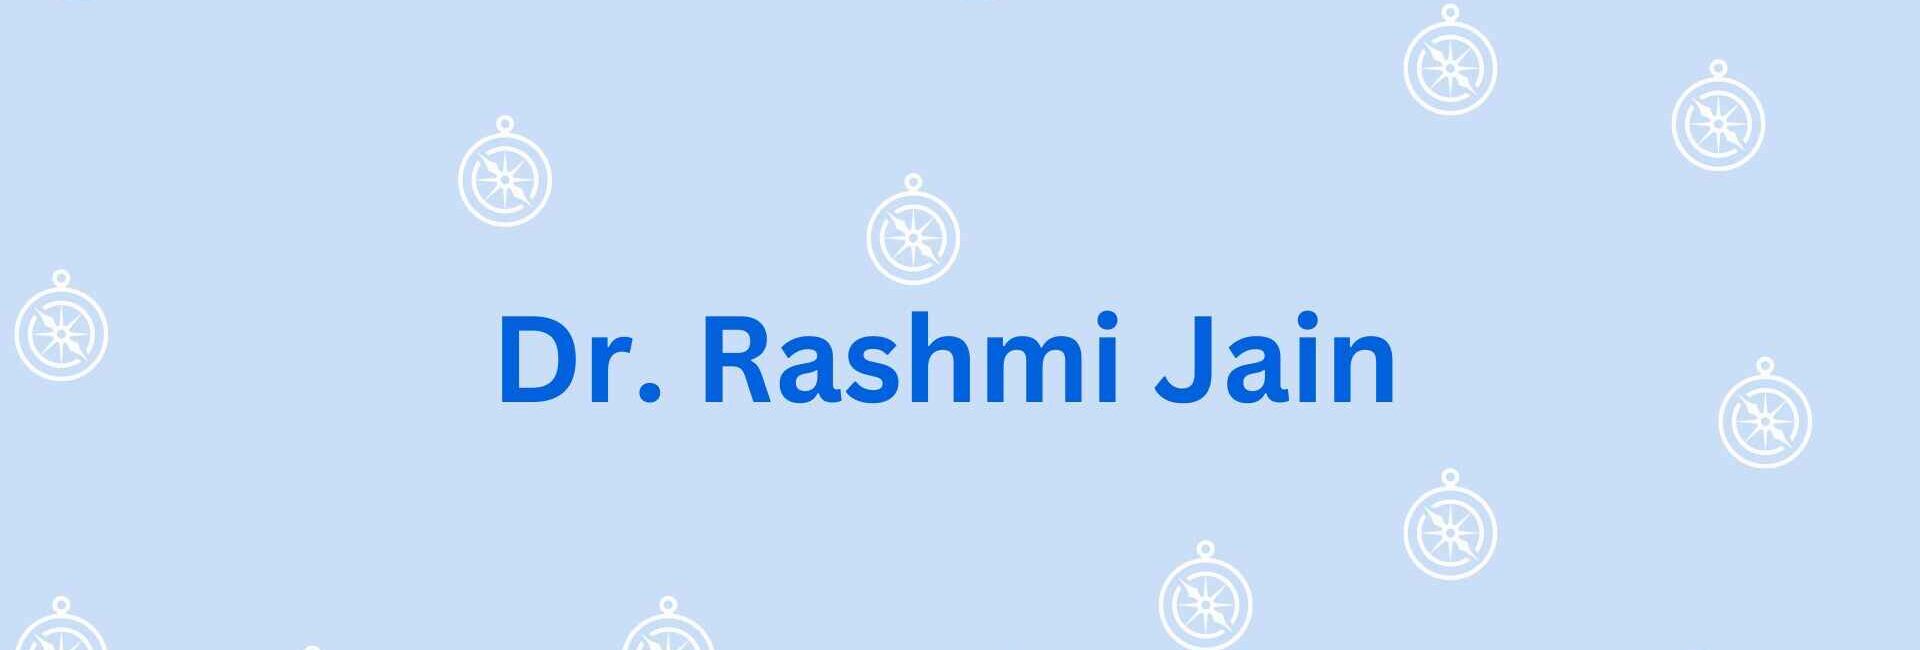 Dr. Rashmi Jain - Vastu shastra consultation in Noida